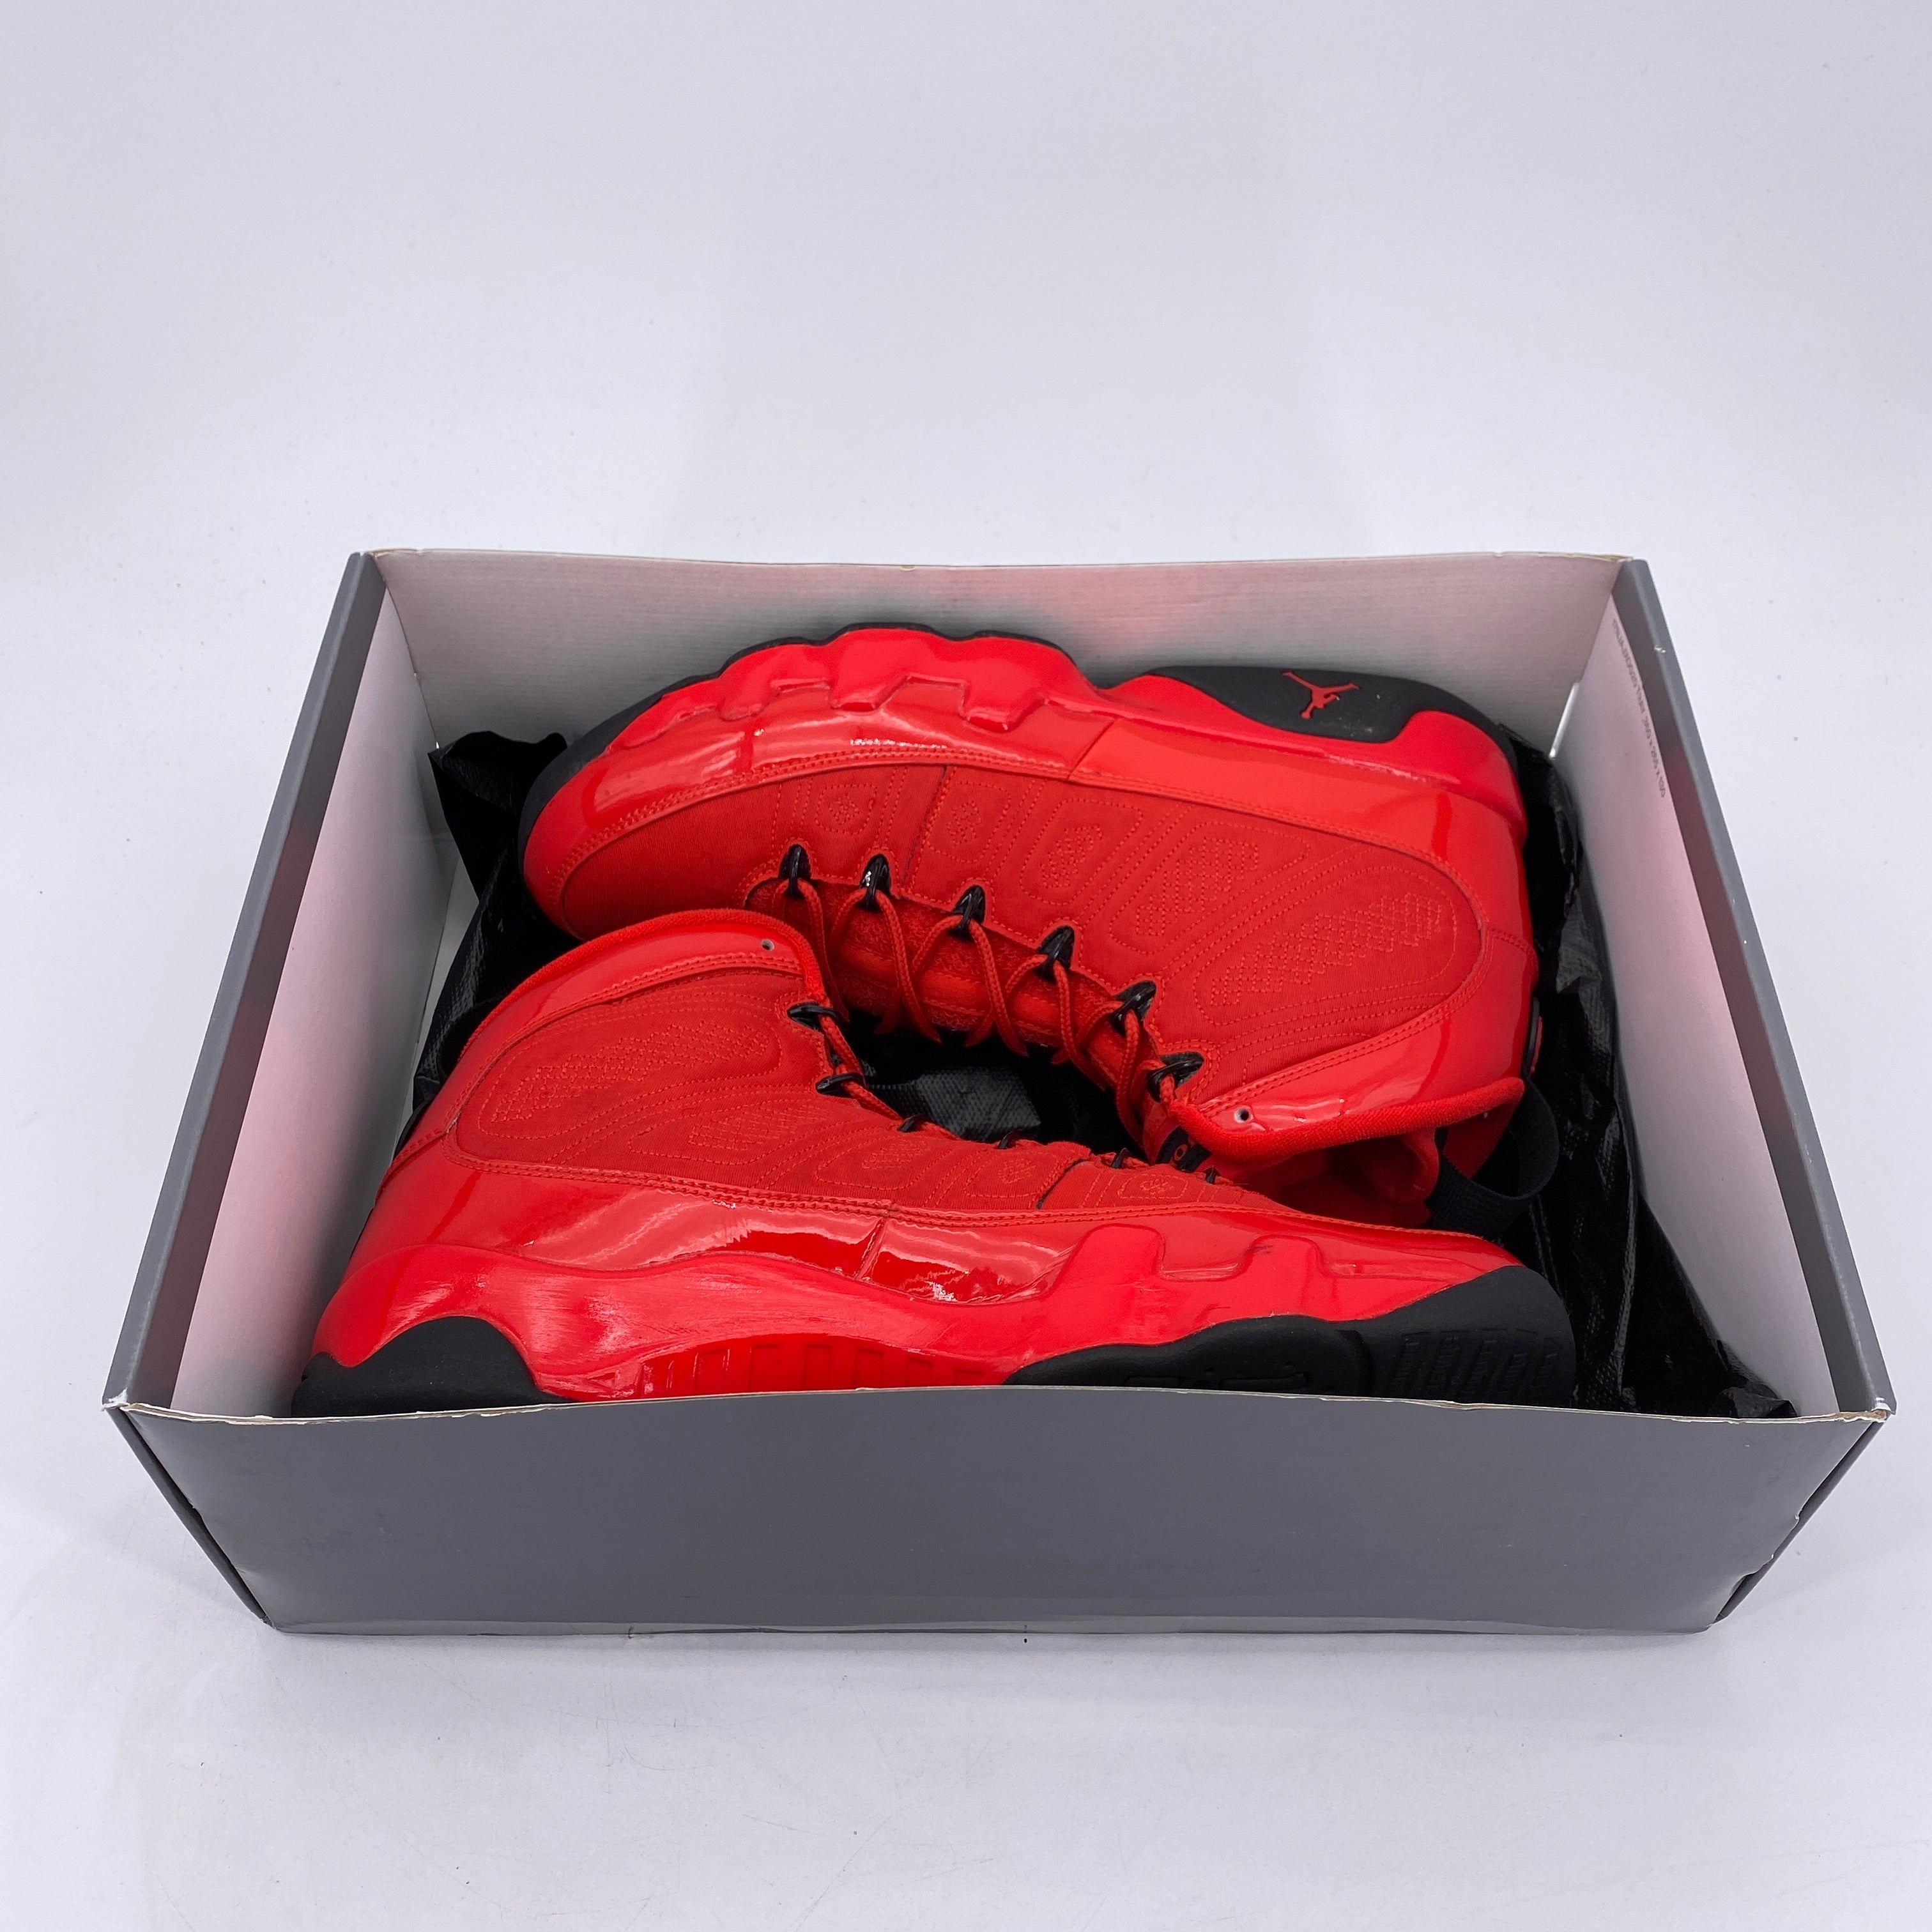 Air Jordan 9 Retro &quot;Chile Red&quot; 2022 Used Size 11